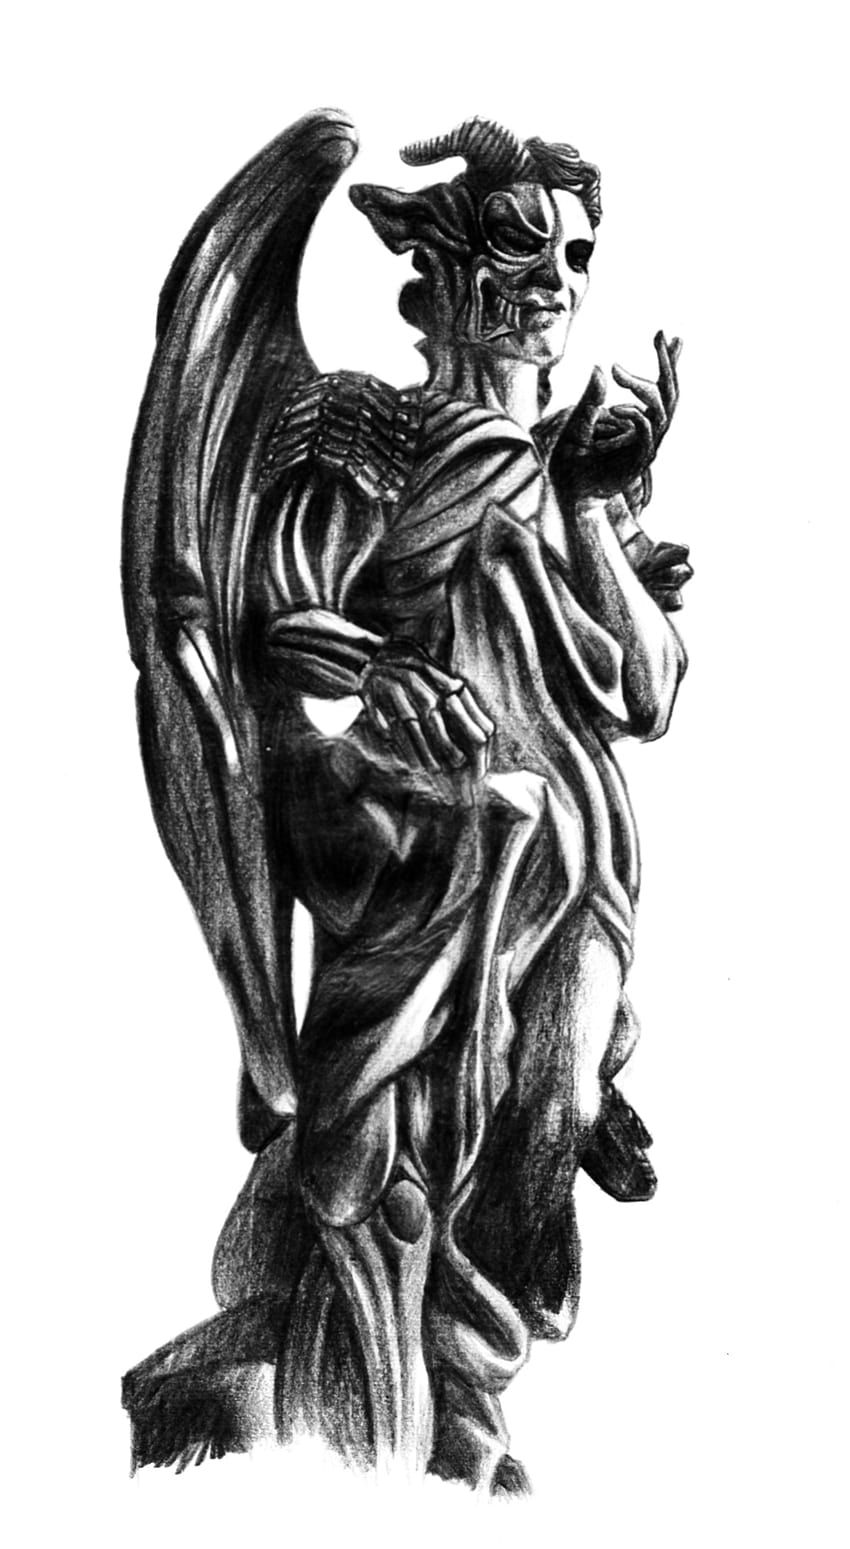 demon vs angel sketch